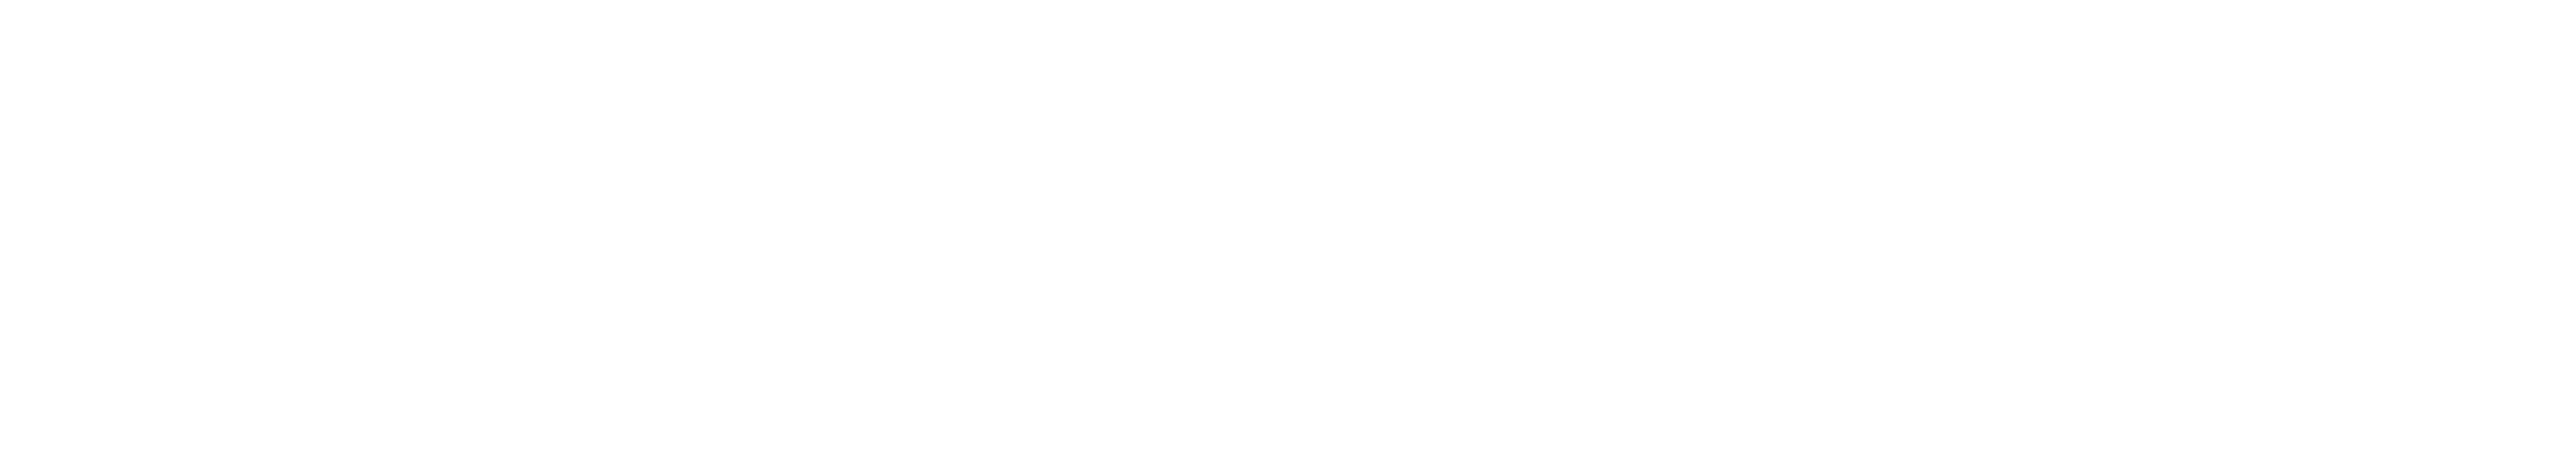 Business Wire Logo Main - White Transparent